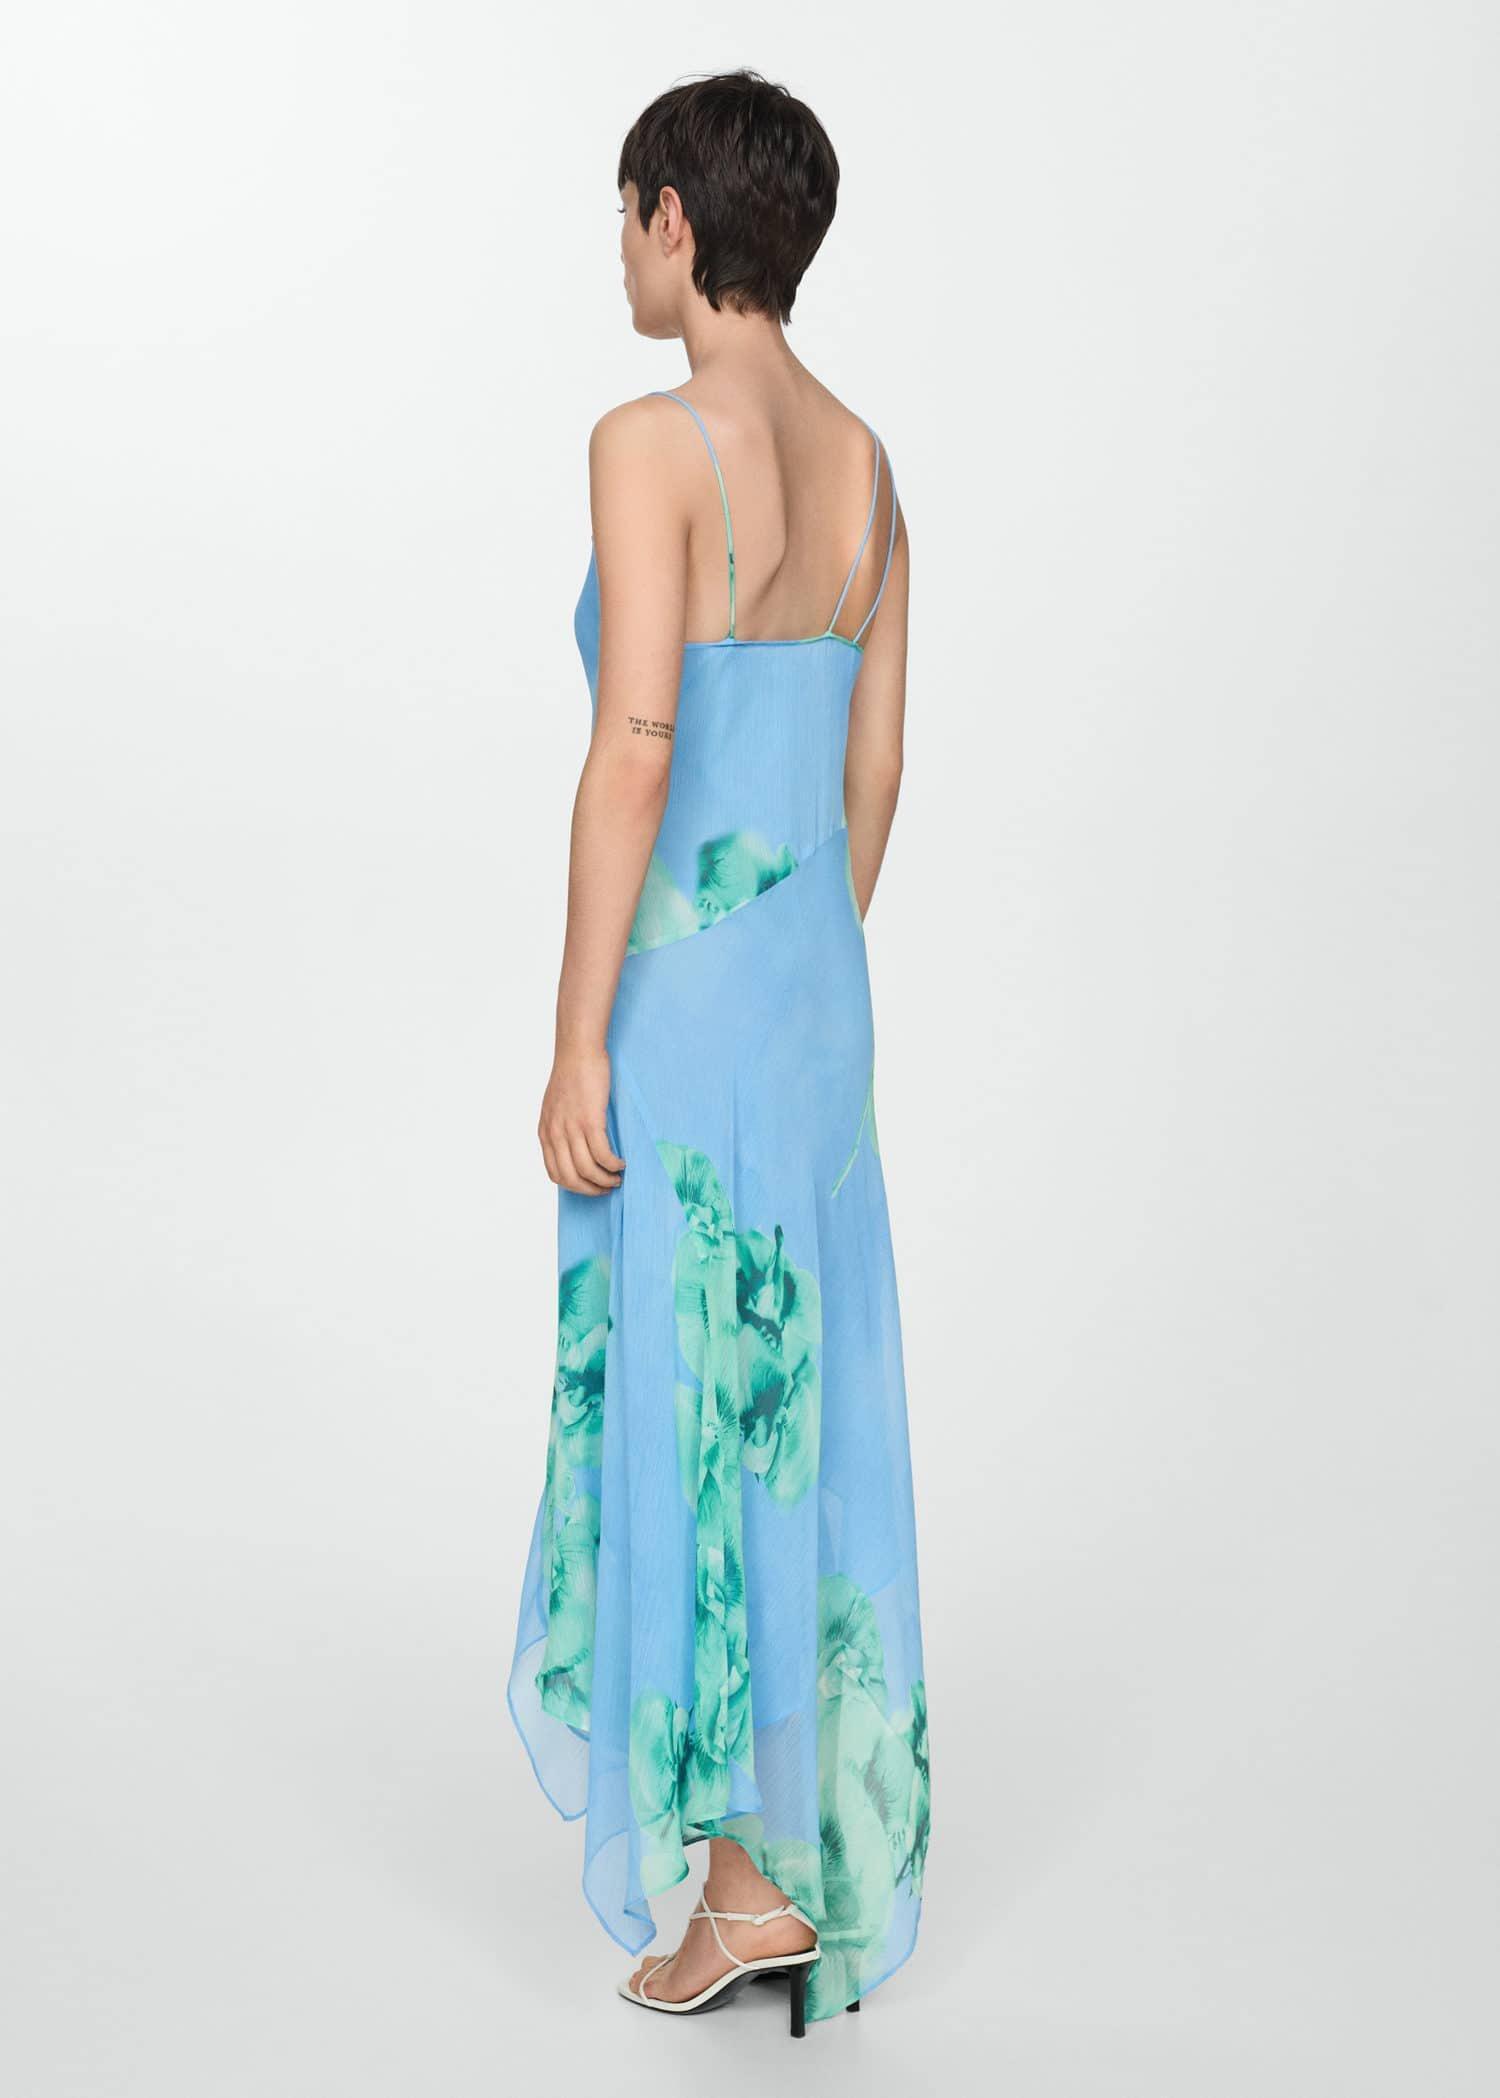 Mango - Blue Lt-Pastel Asymmetrical Floral Dress